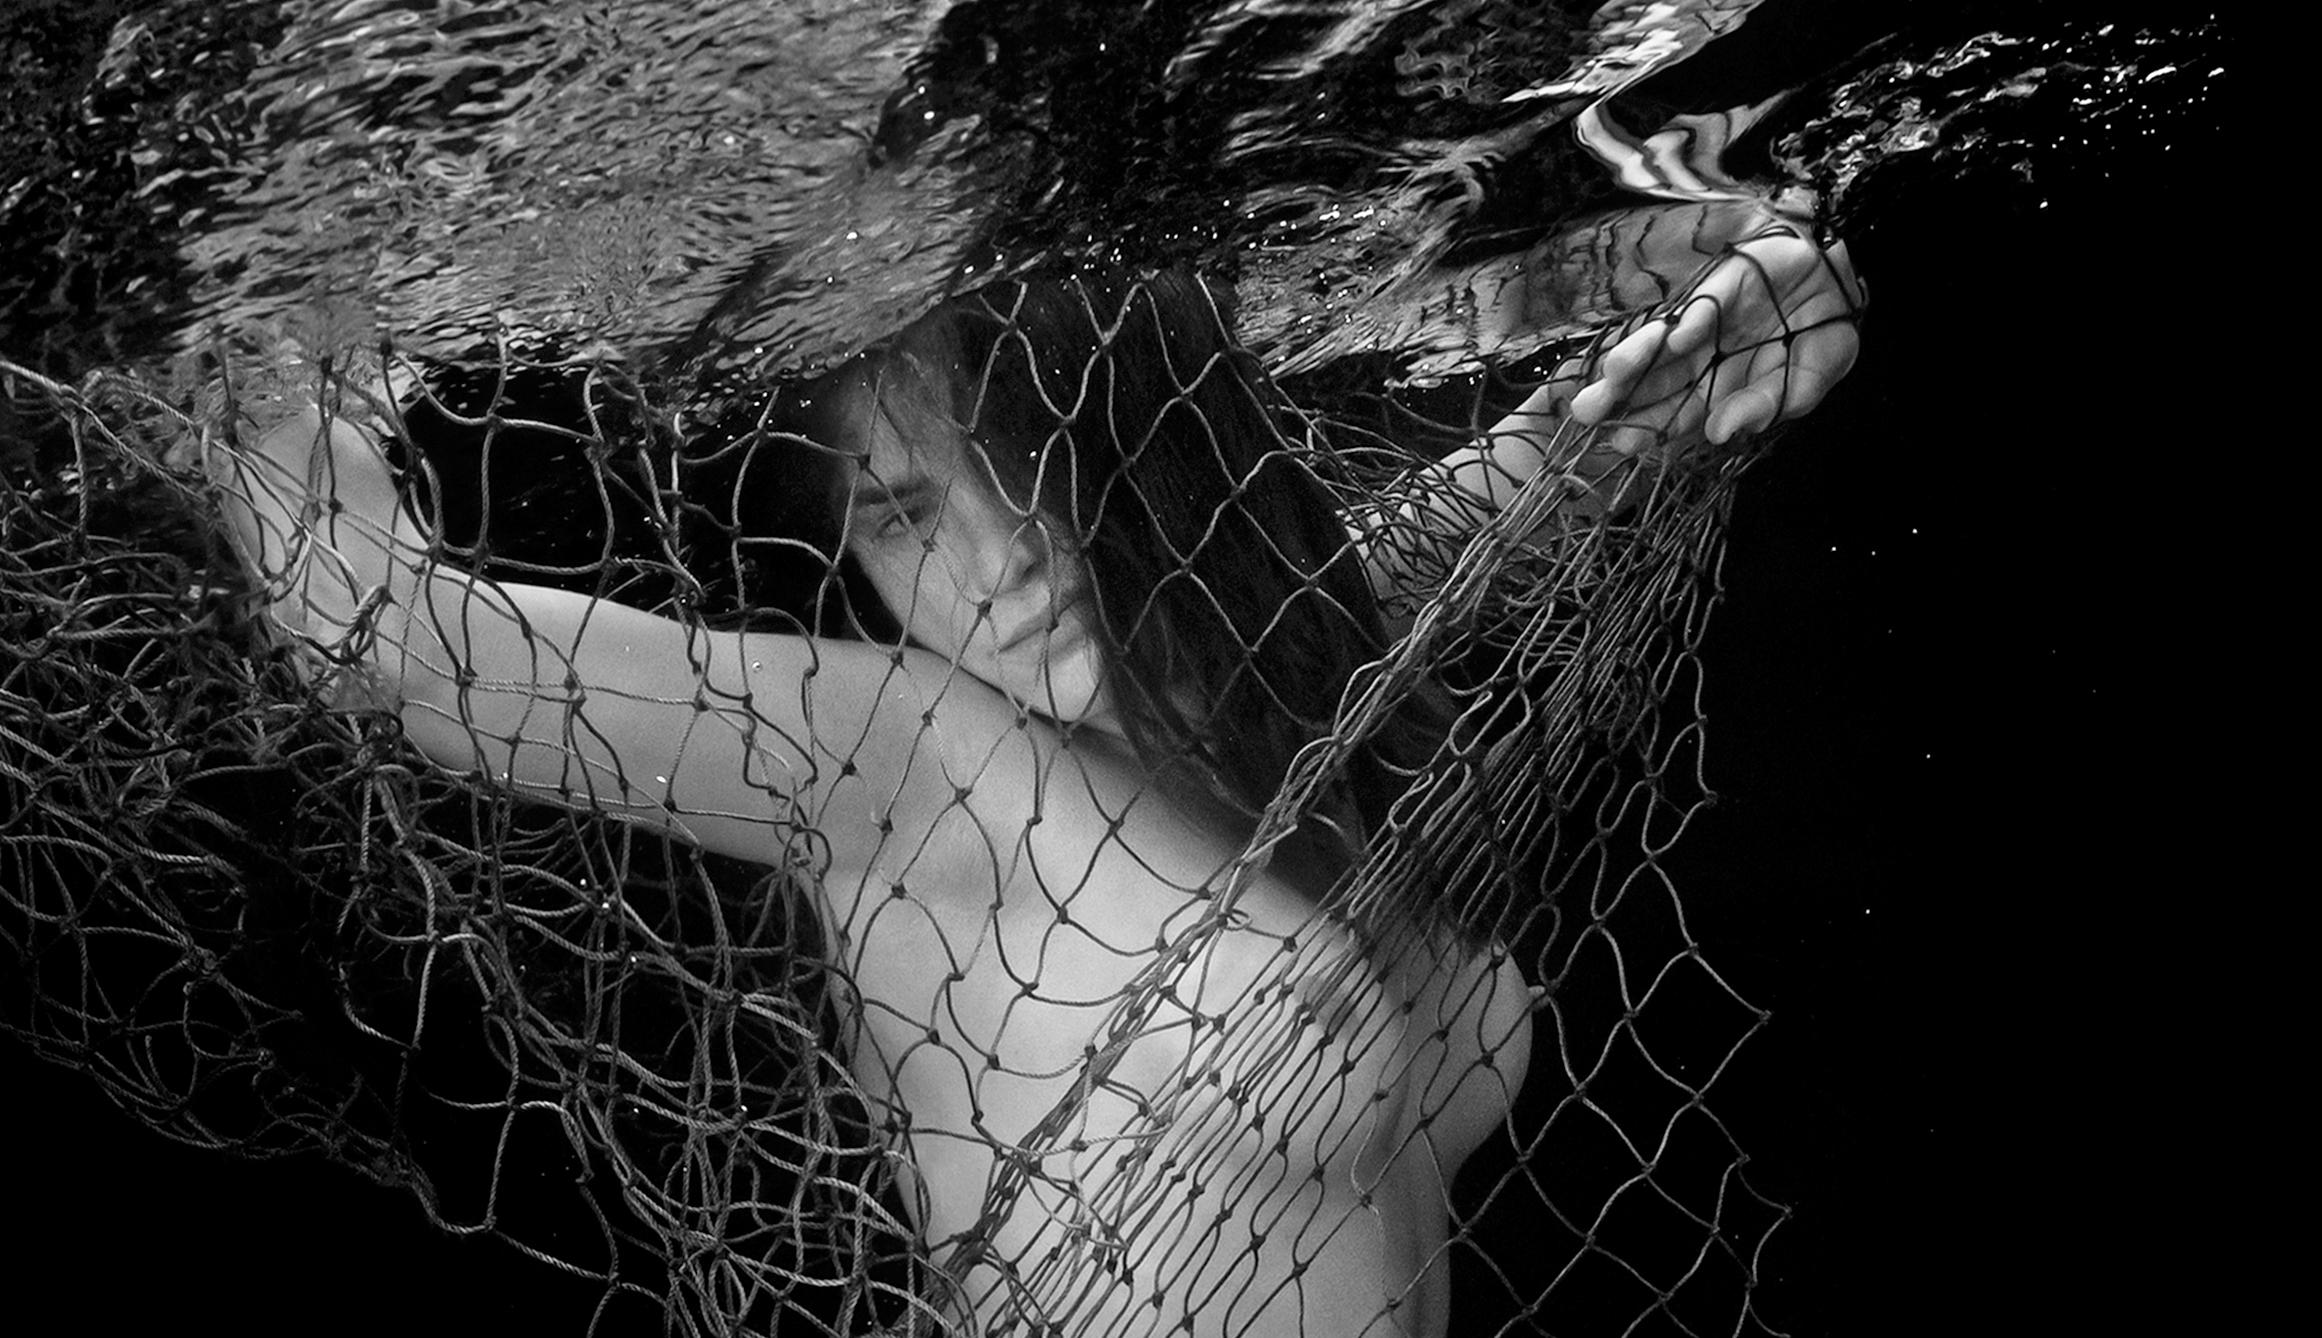 Miraculous Catch - underwater black & white nude photograph - acrylic 36x24